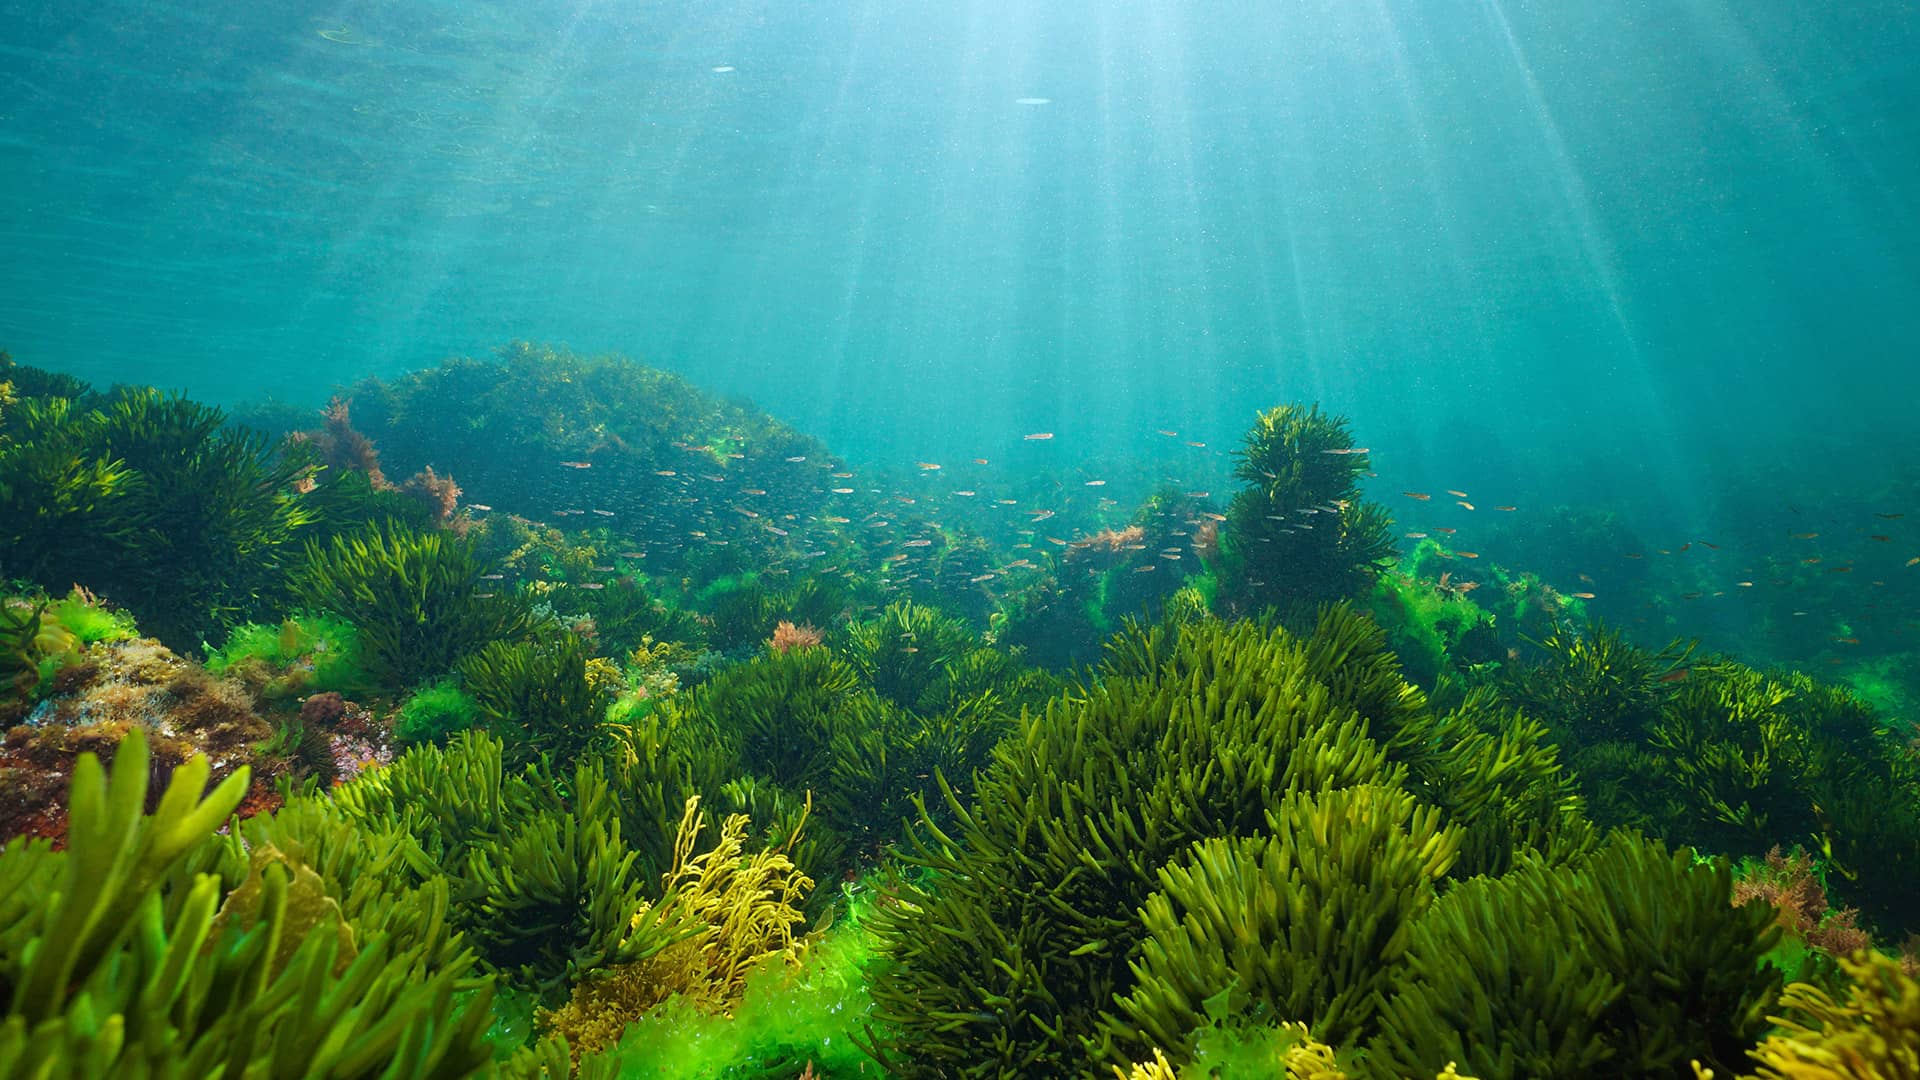 plus de 40 000 espèces d'algues marines